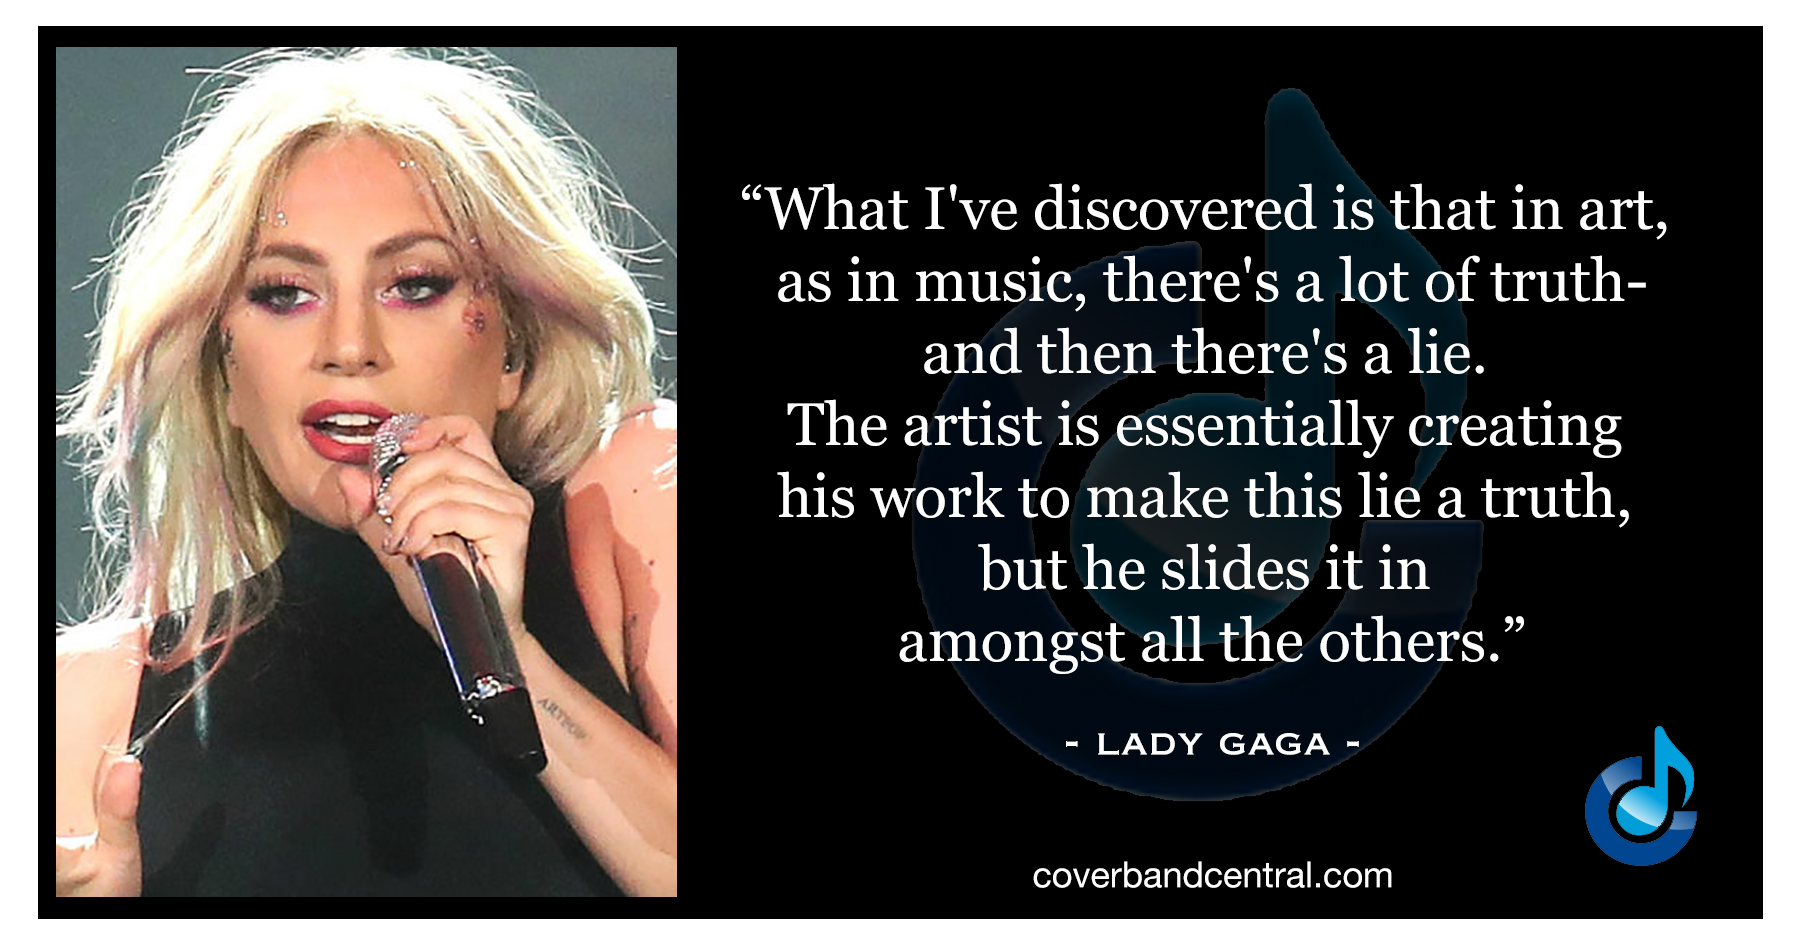 Lady Gaga quote